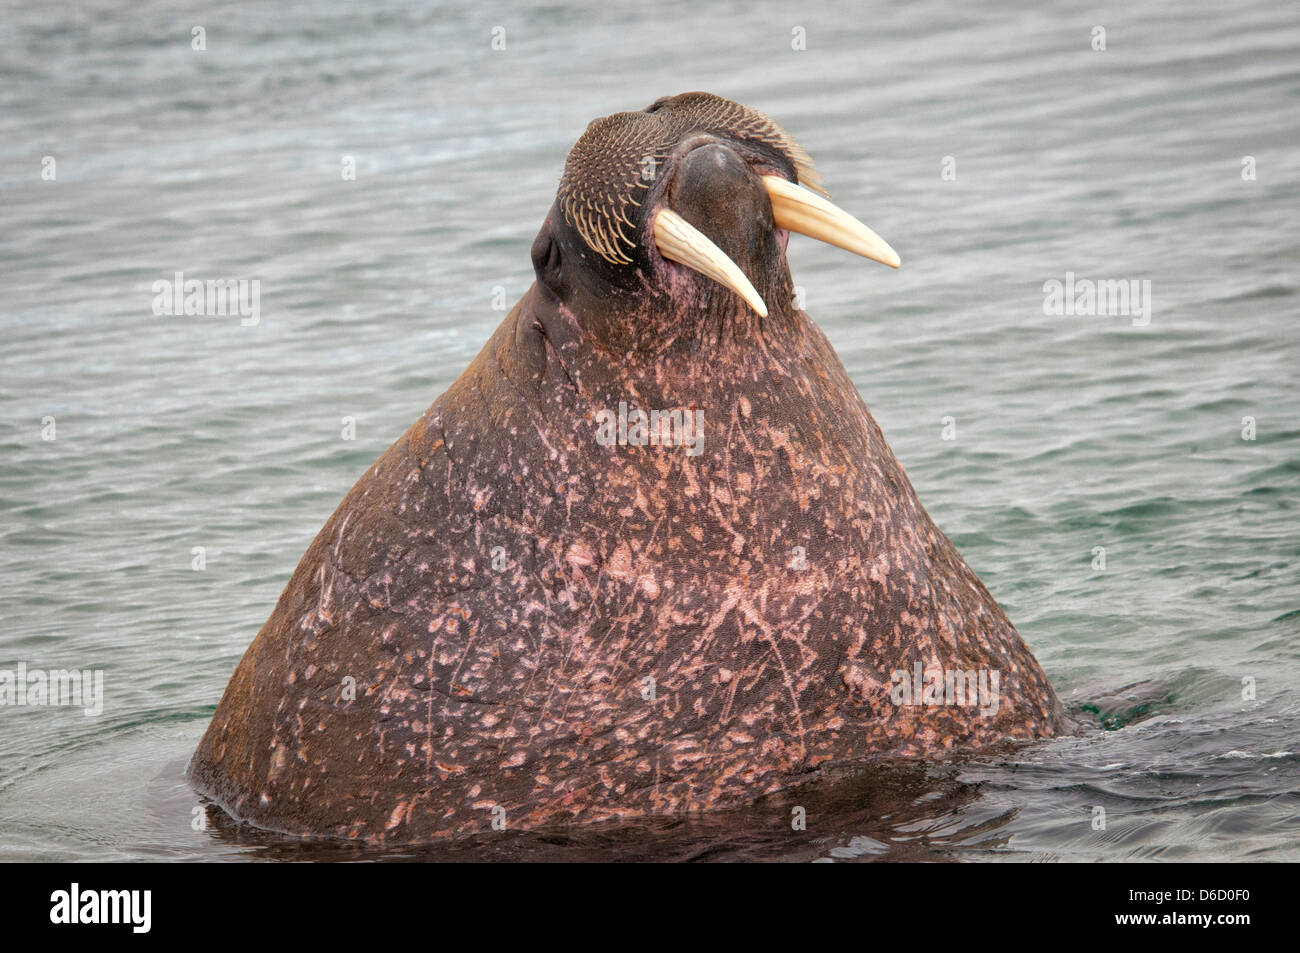 Walrus, Odobenus rosmarus, in the water, Torelineset, Svalbard Archipelago, Norway Stock Photo